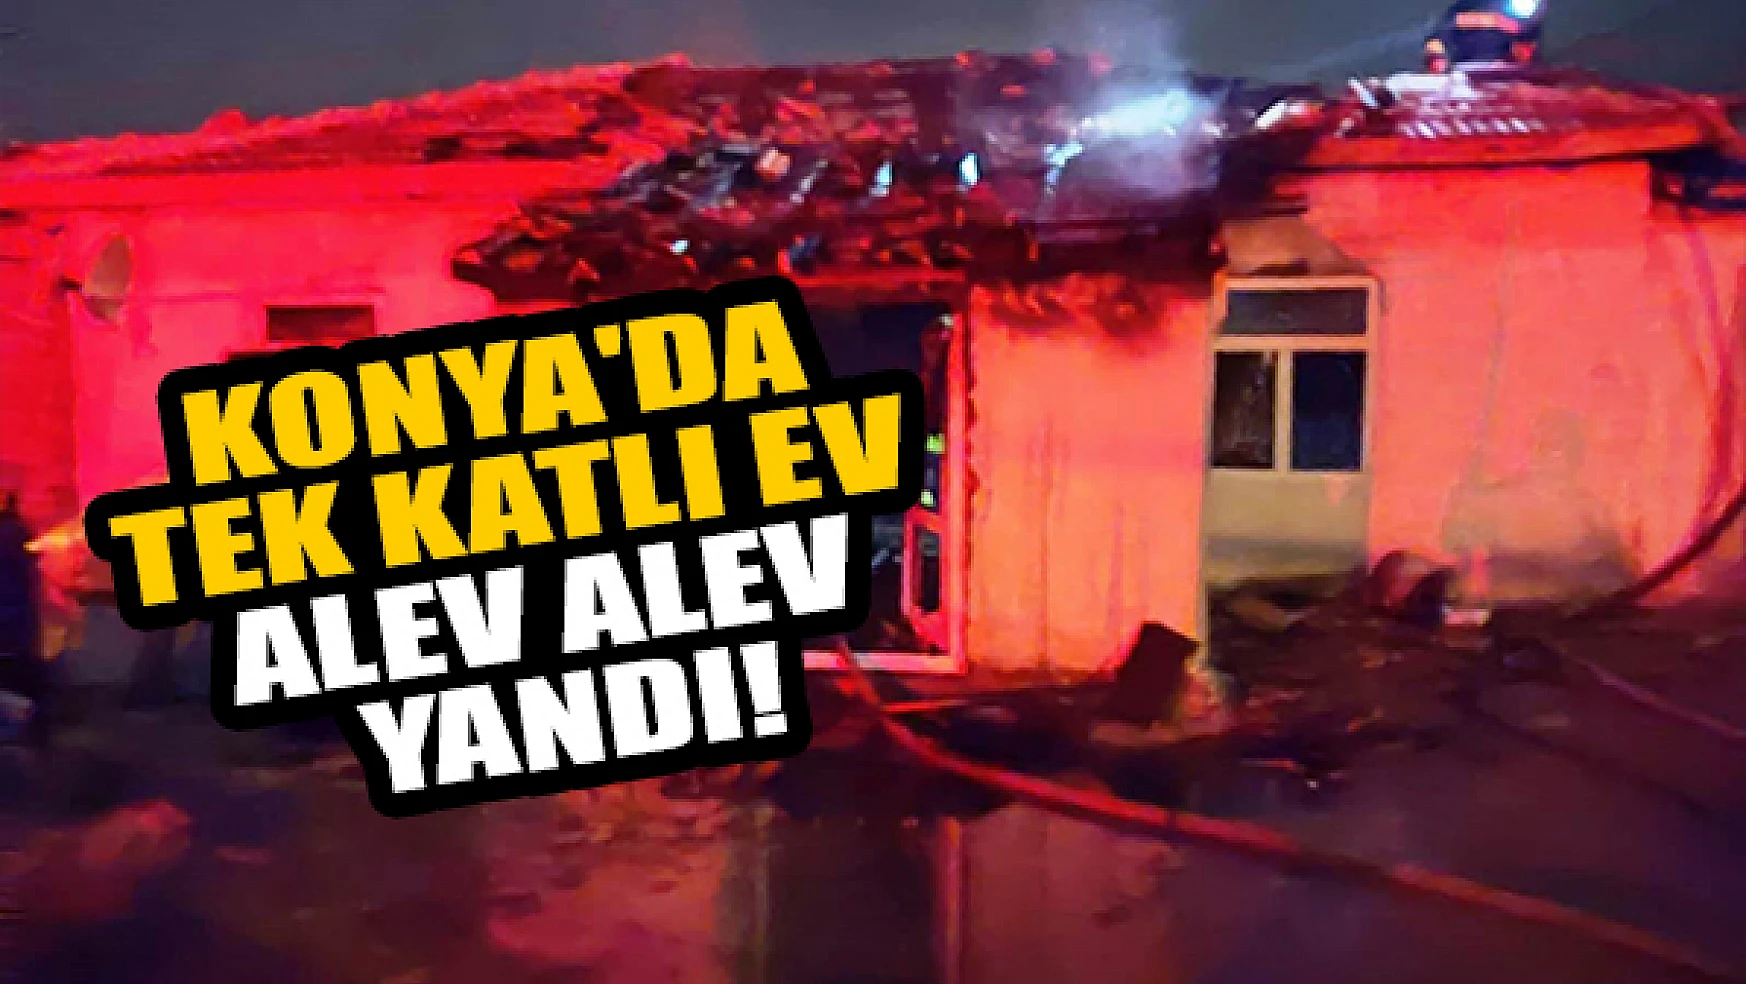 Konya'da tek katlı ev alev alev yandı!